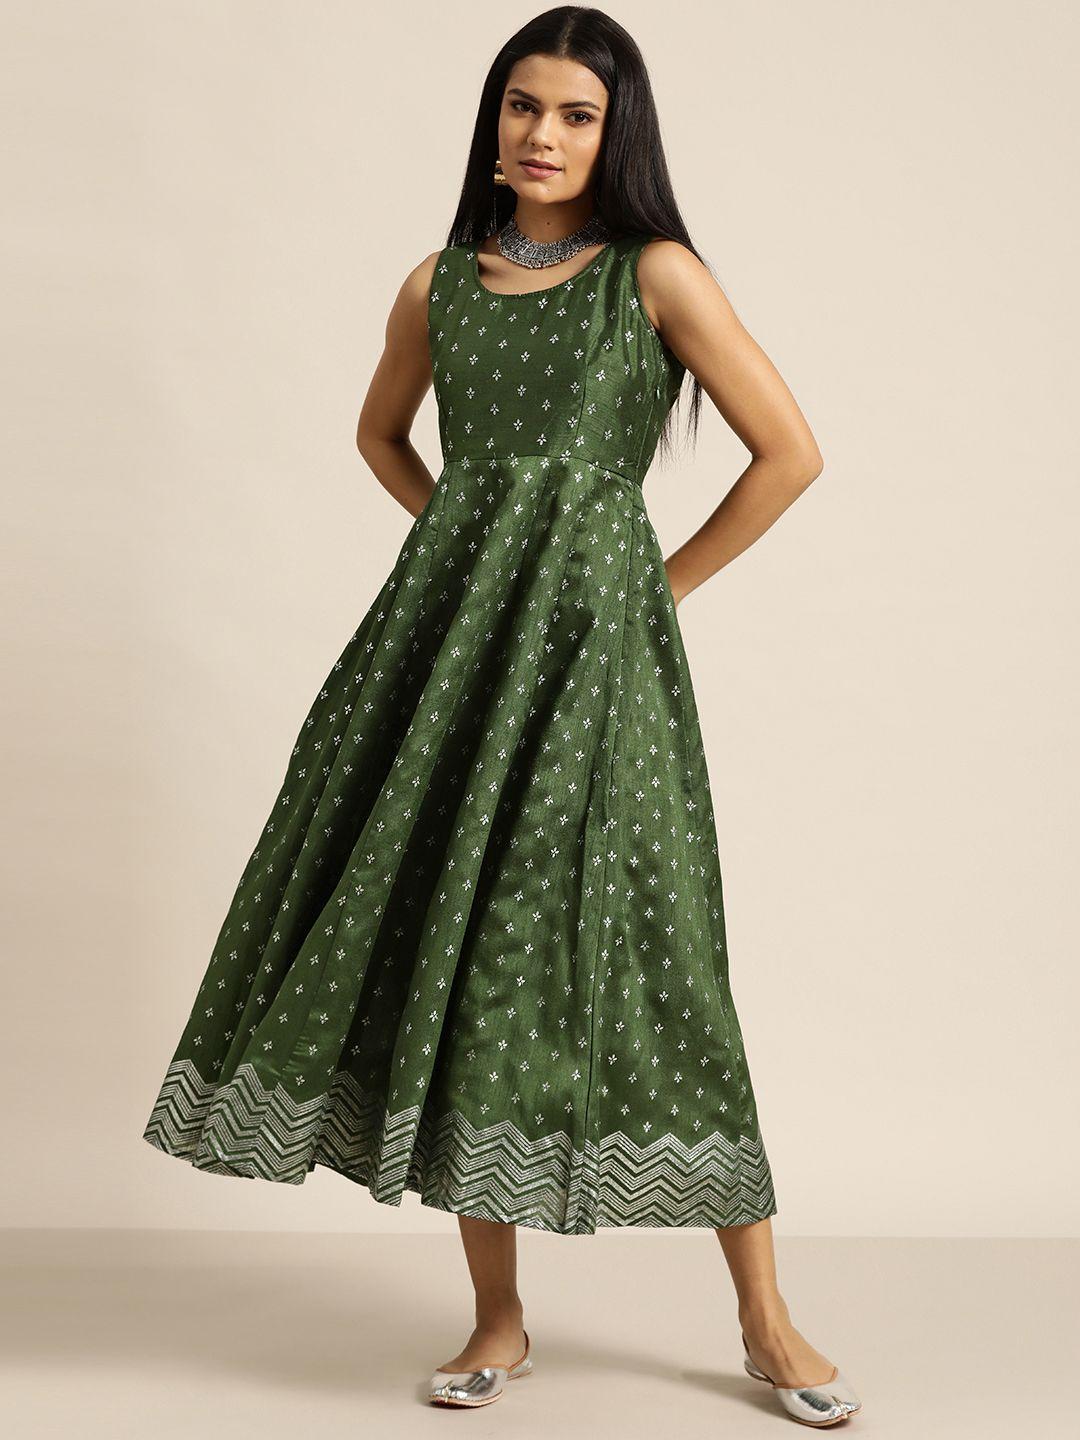 shae by sassafras green & silver ethnic motif printed a-line midi dress